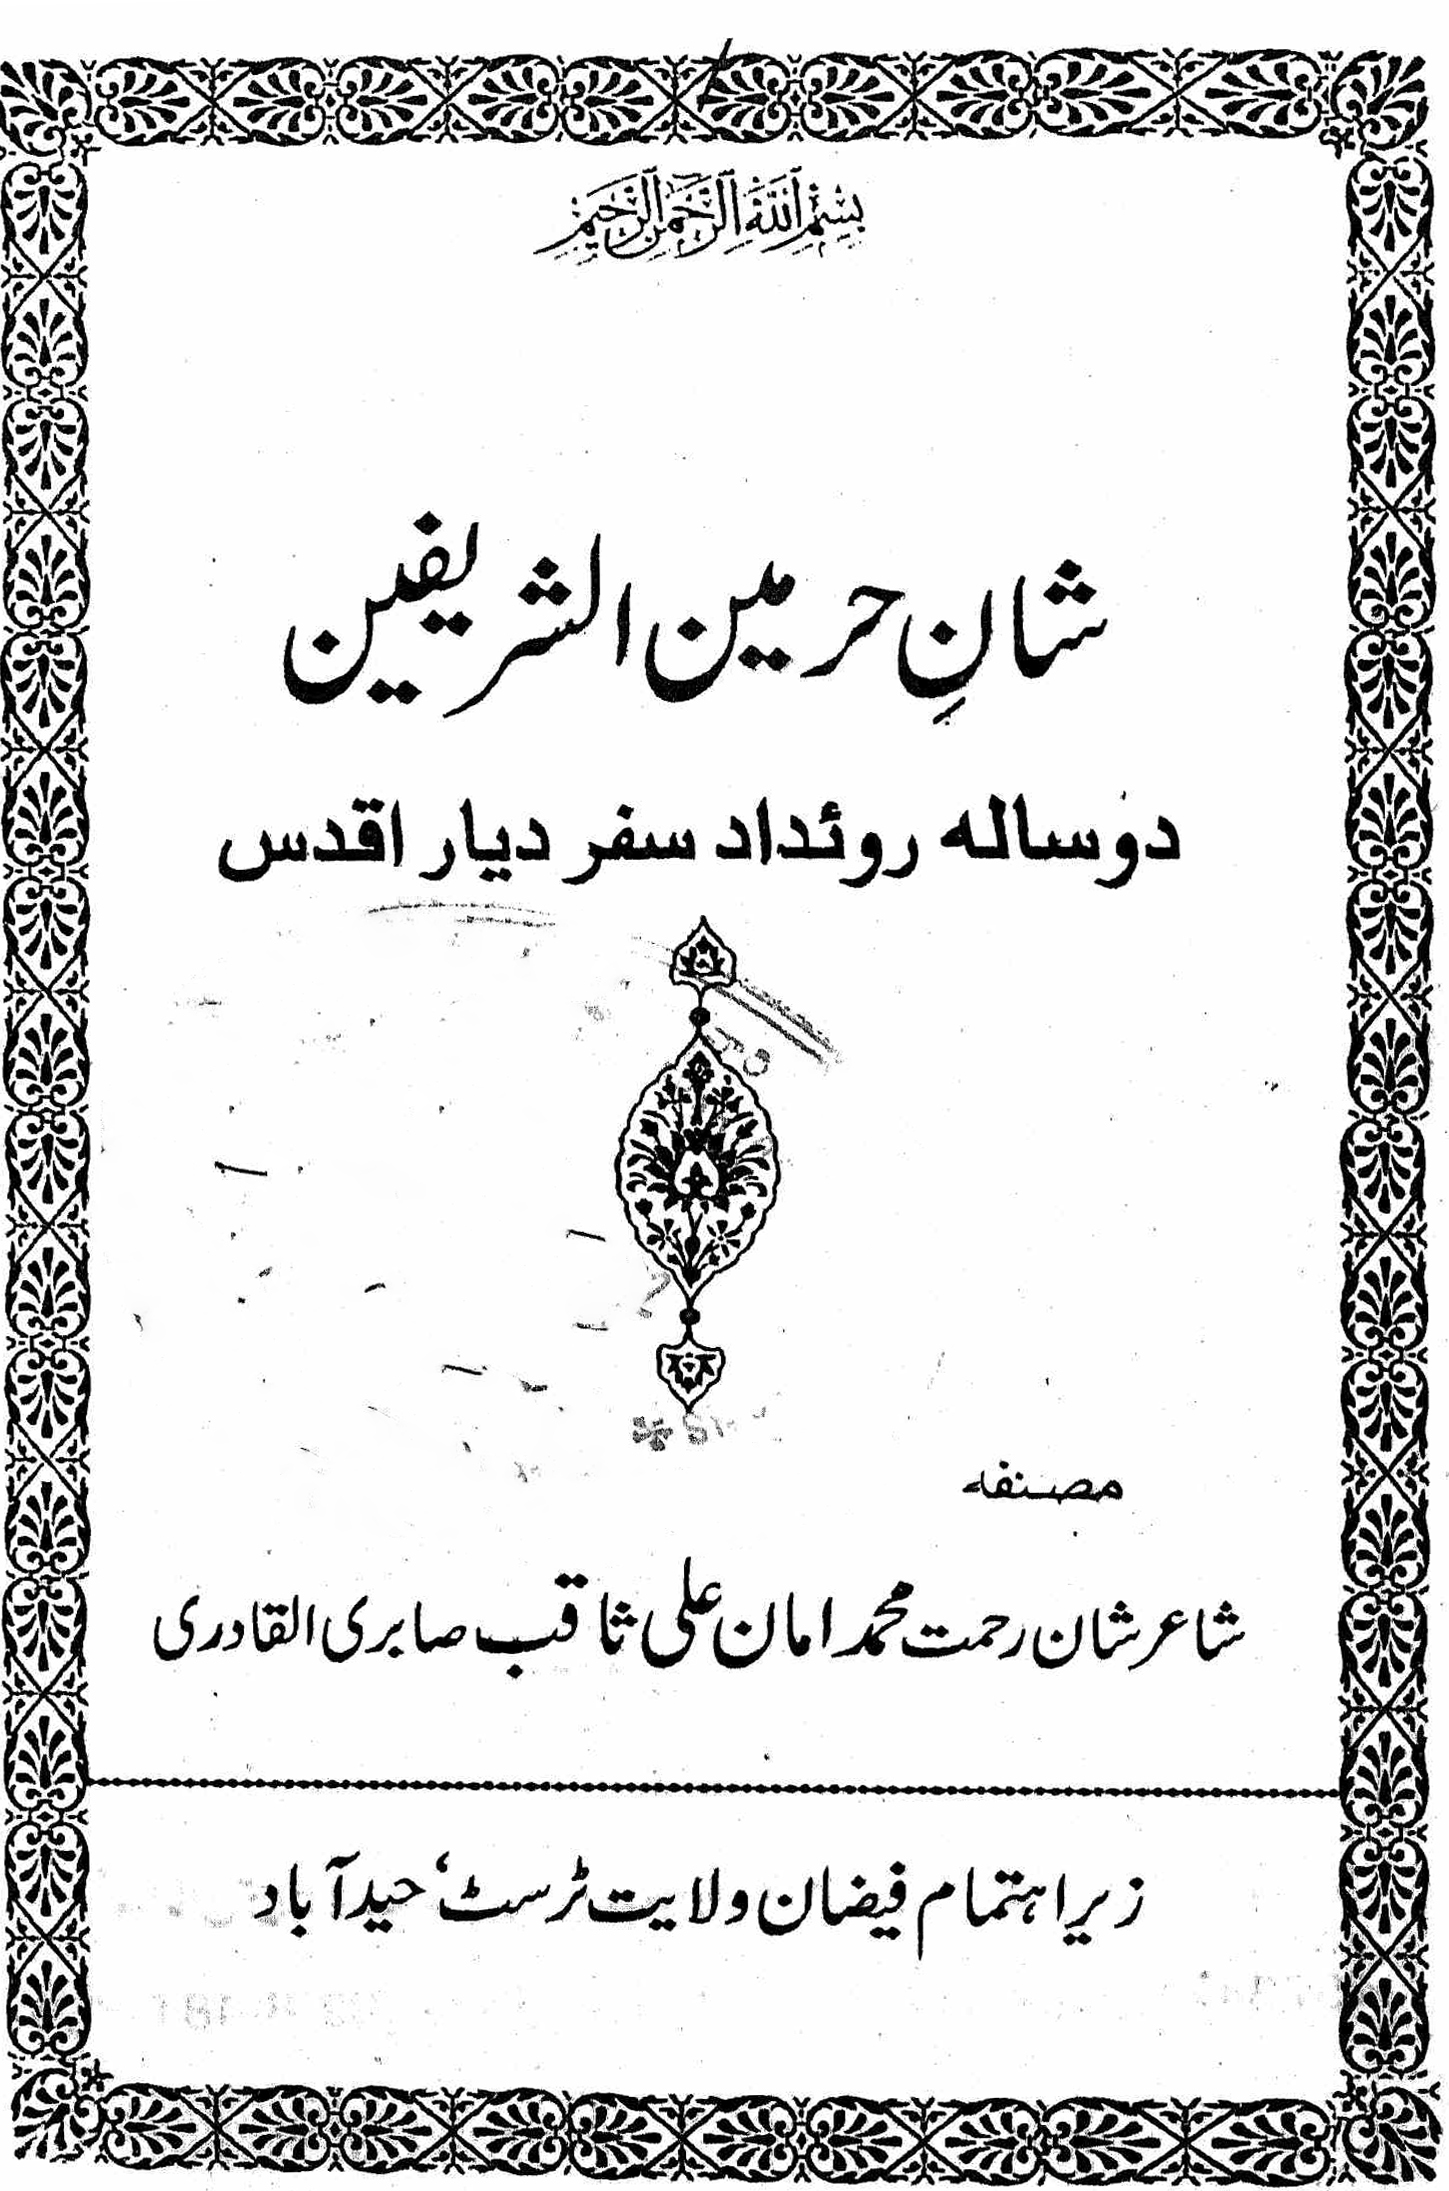 Shan-e-Harmain Al-Sharfain